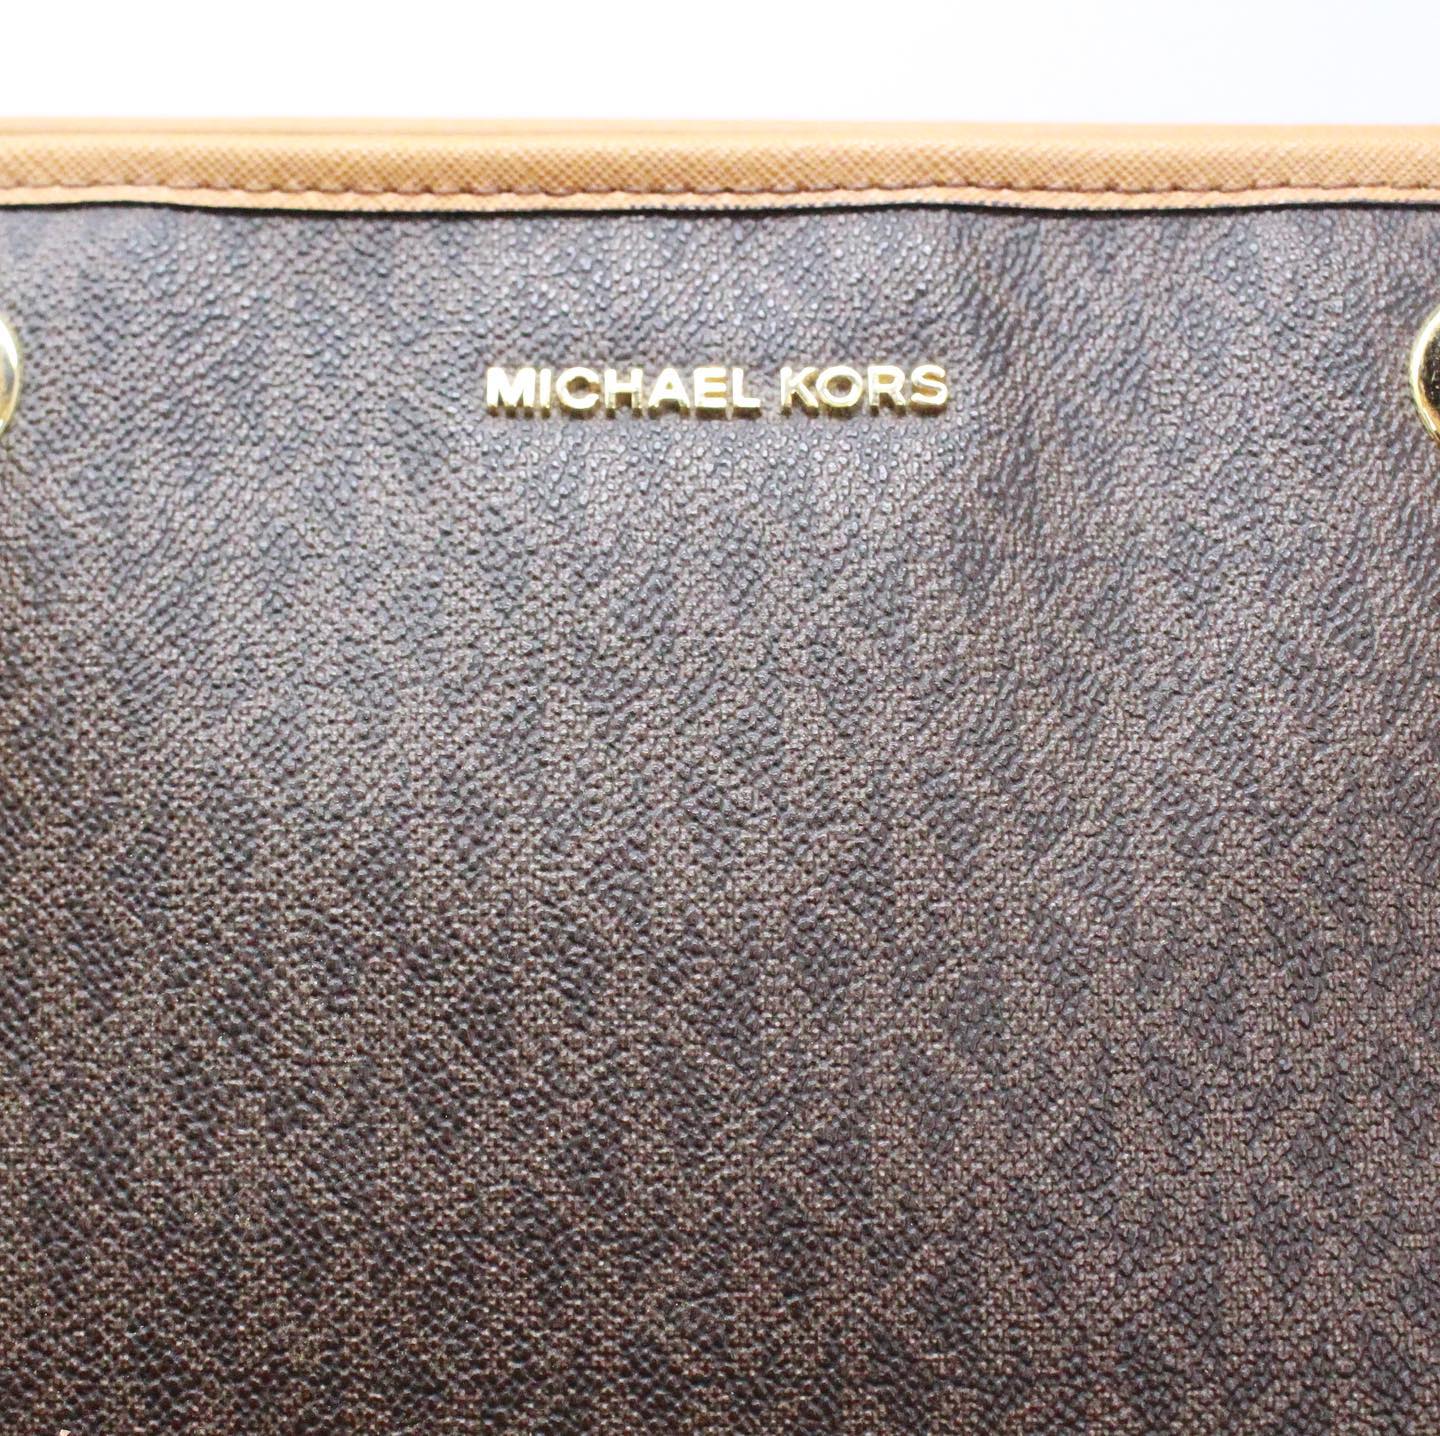 Michael Kors Black and Grey Leather Monogram Handbag For Sale at